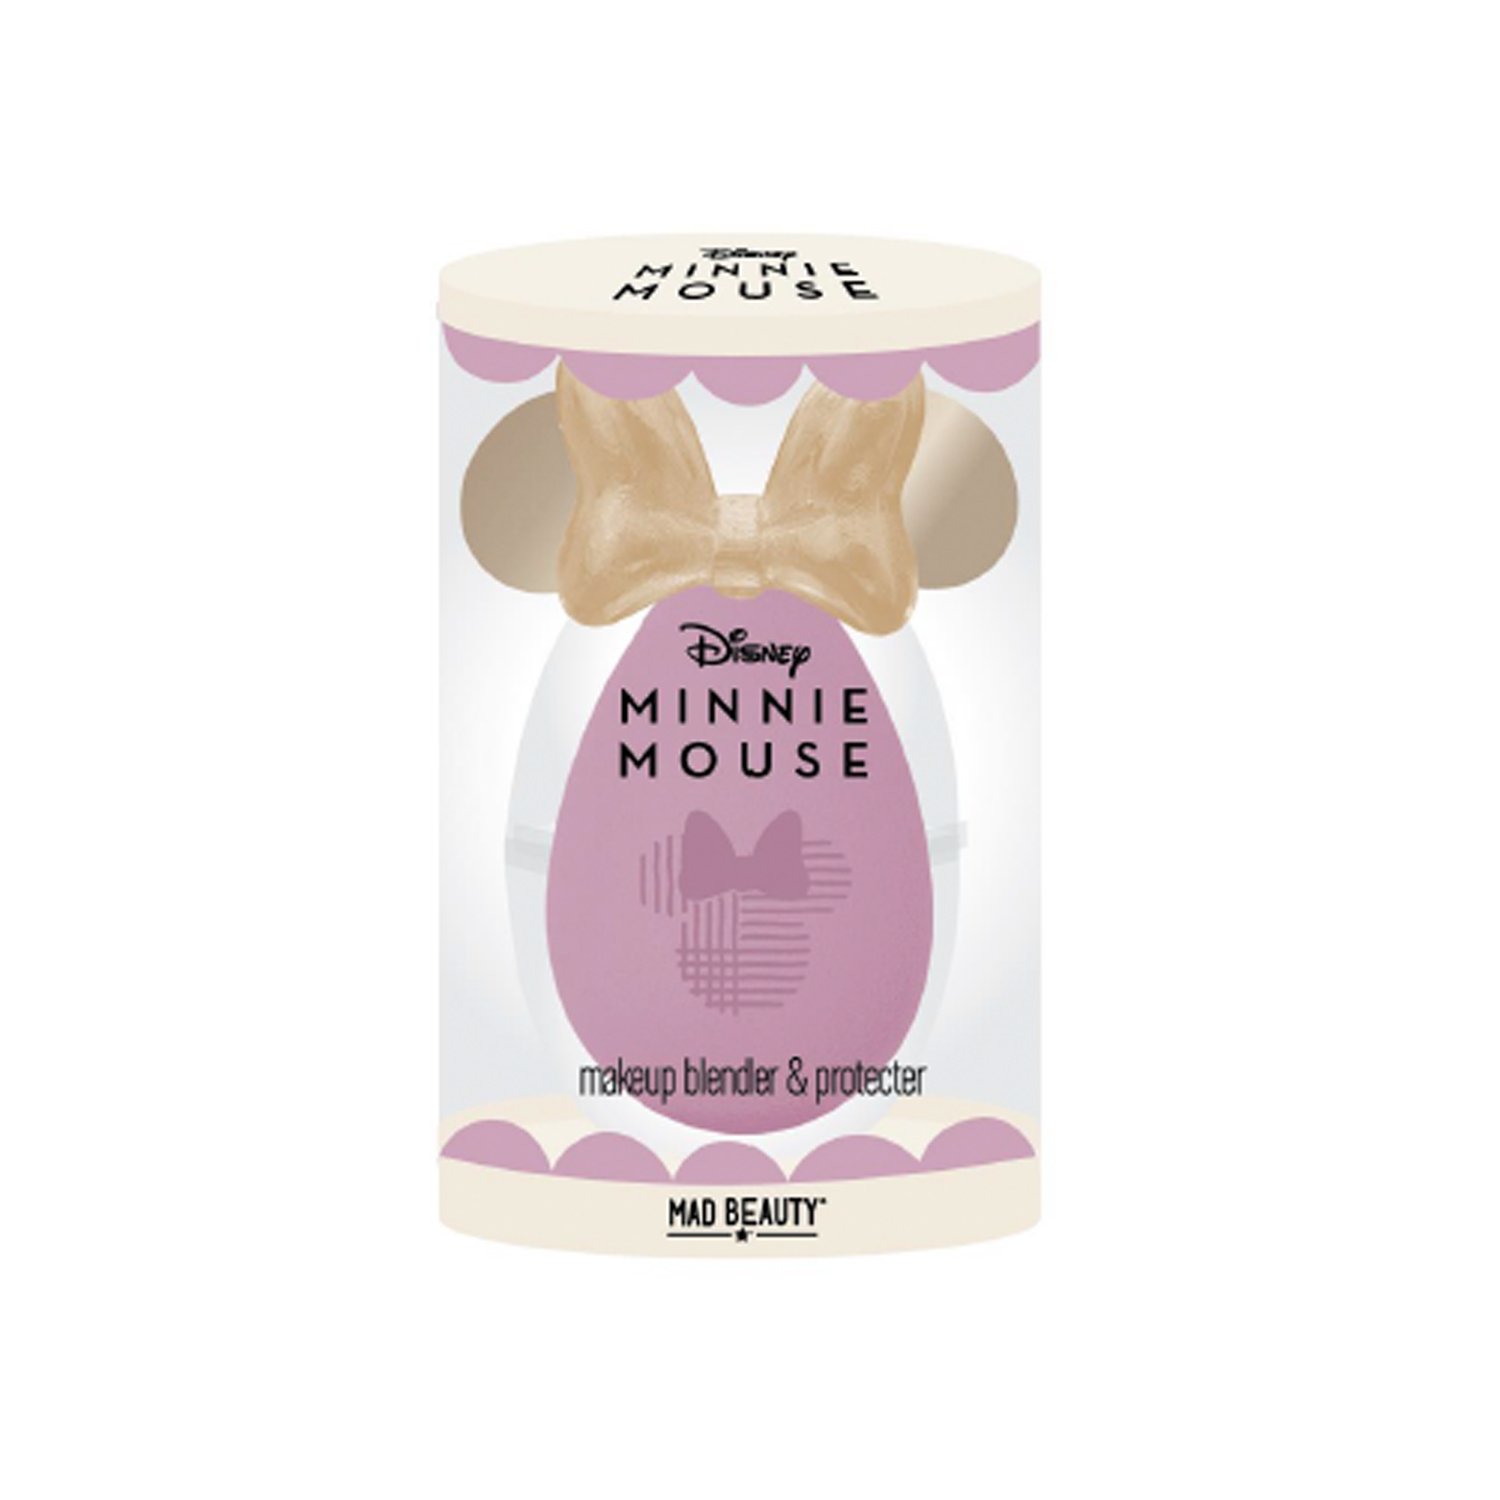 Disney Minnie Bow Magic Blender & Protector